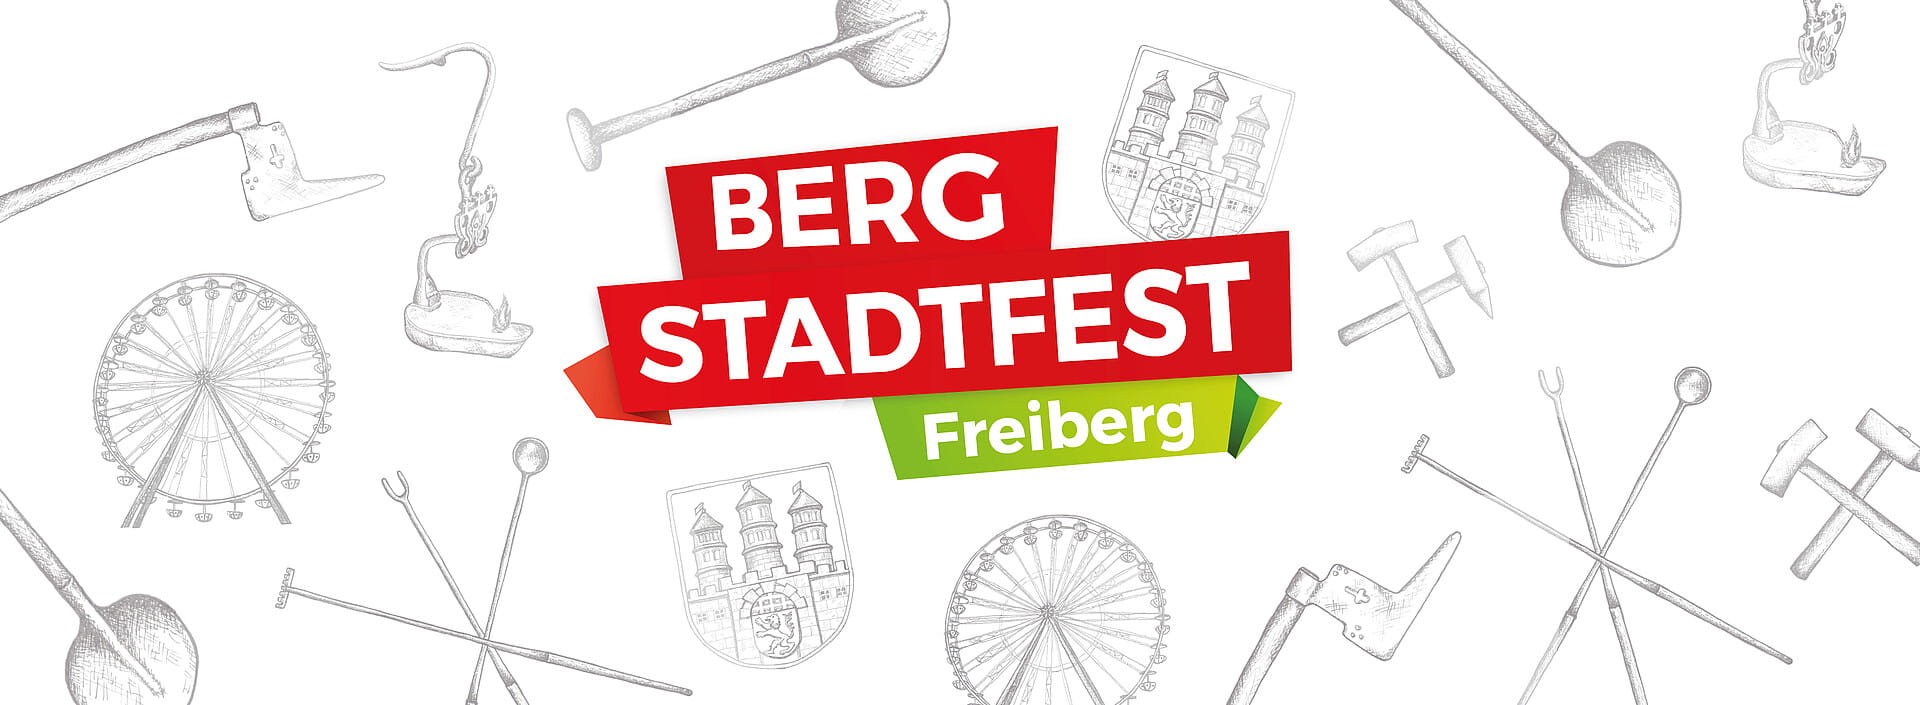 Bergstadtfest_Header.jpg